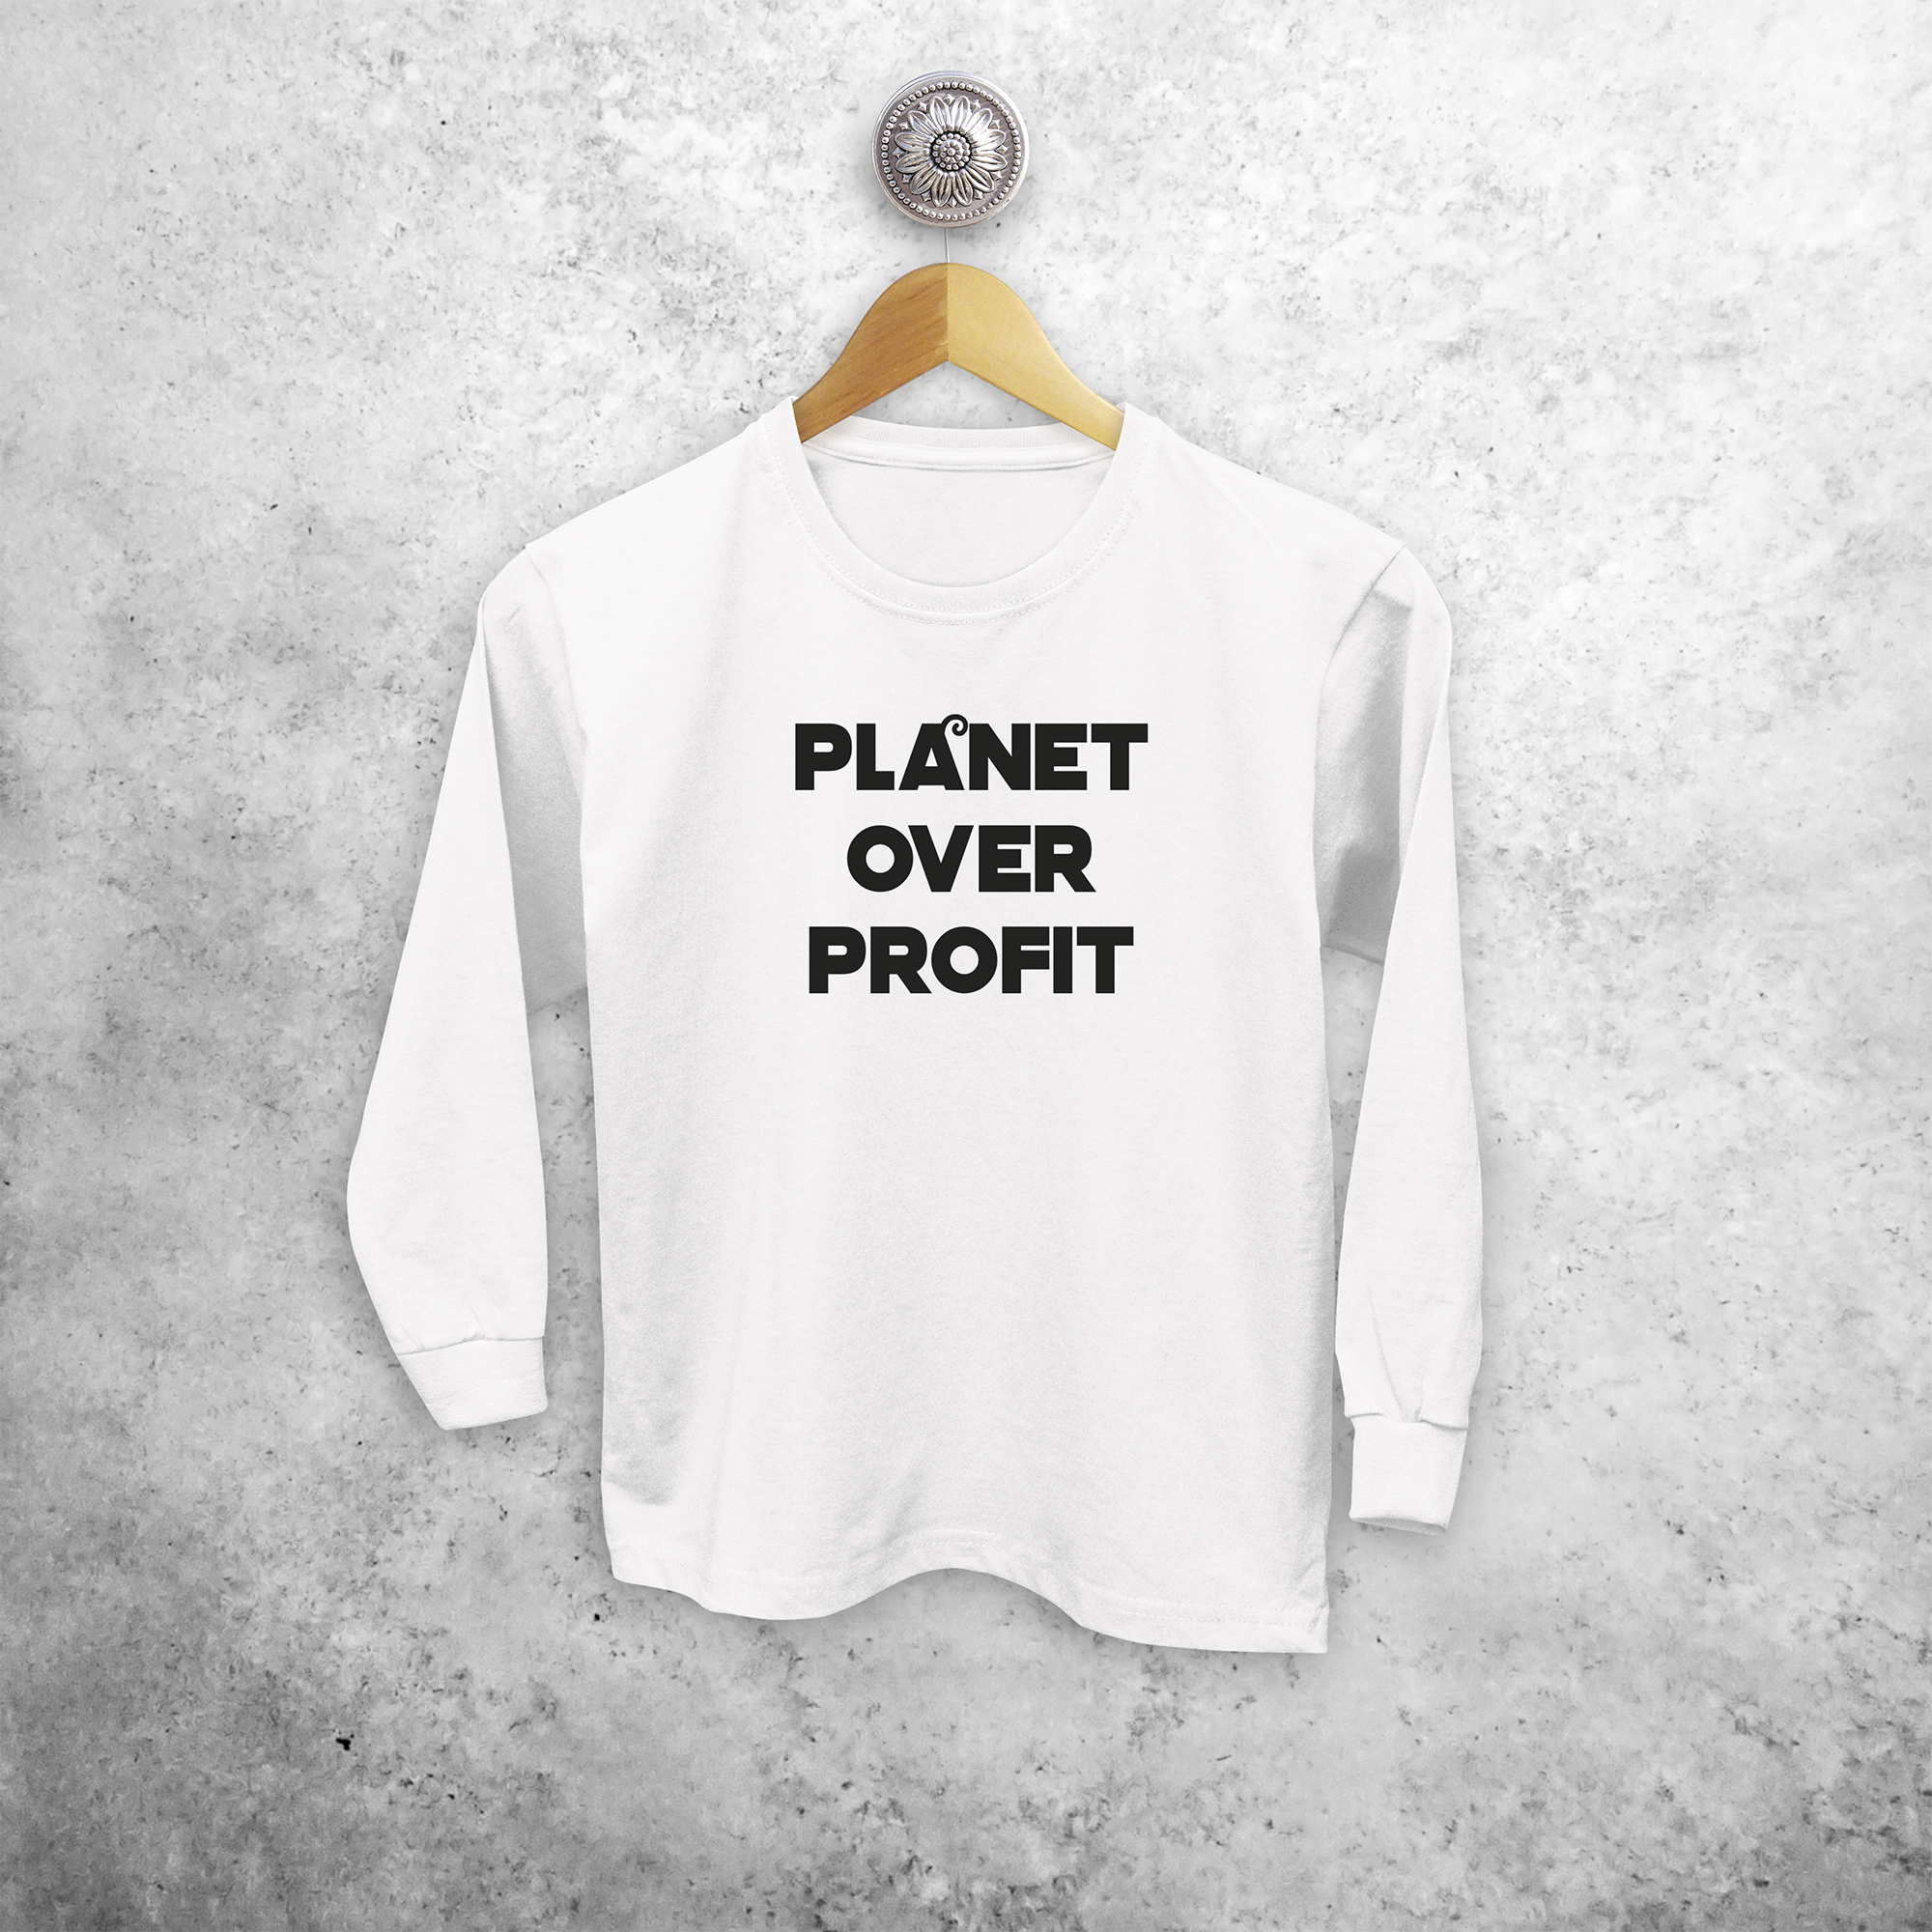 'Planet over profit' kids longsleeve shirt